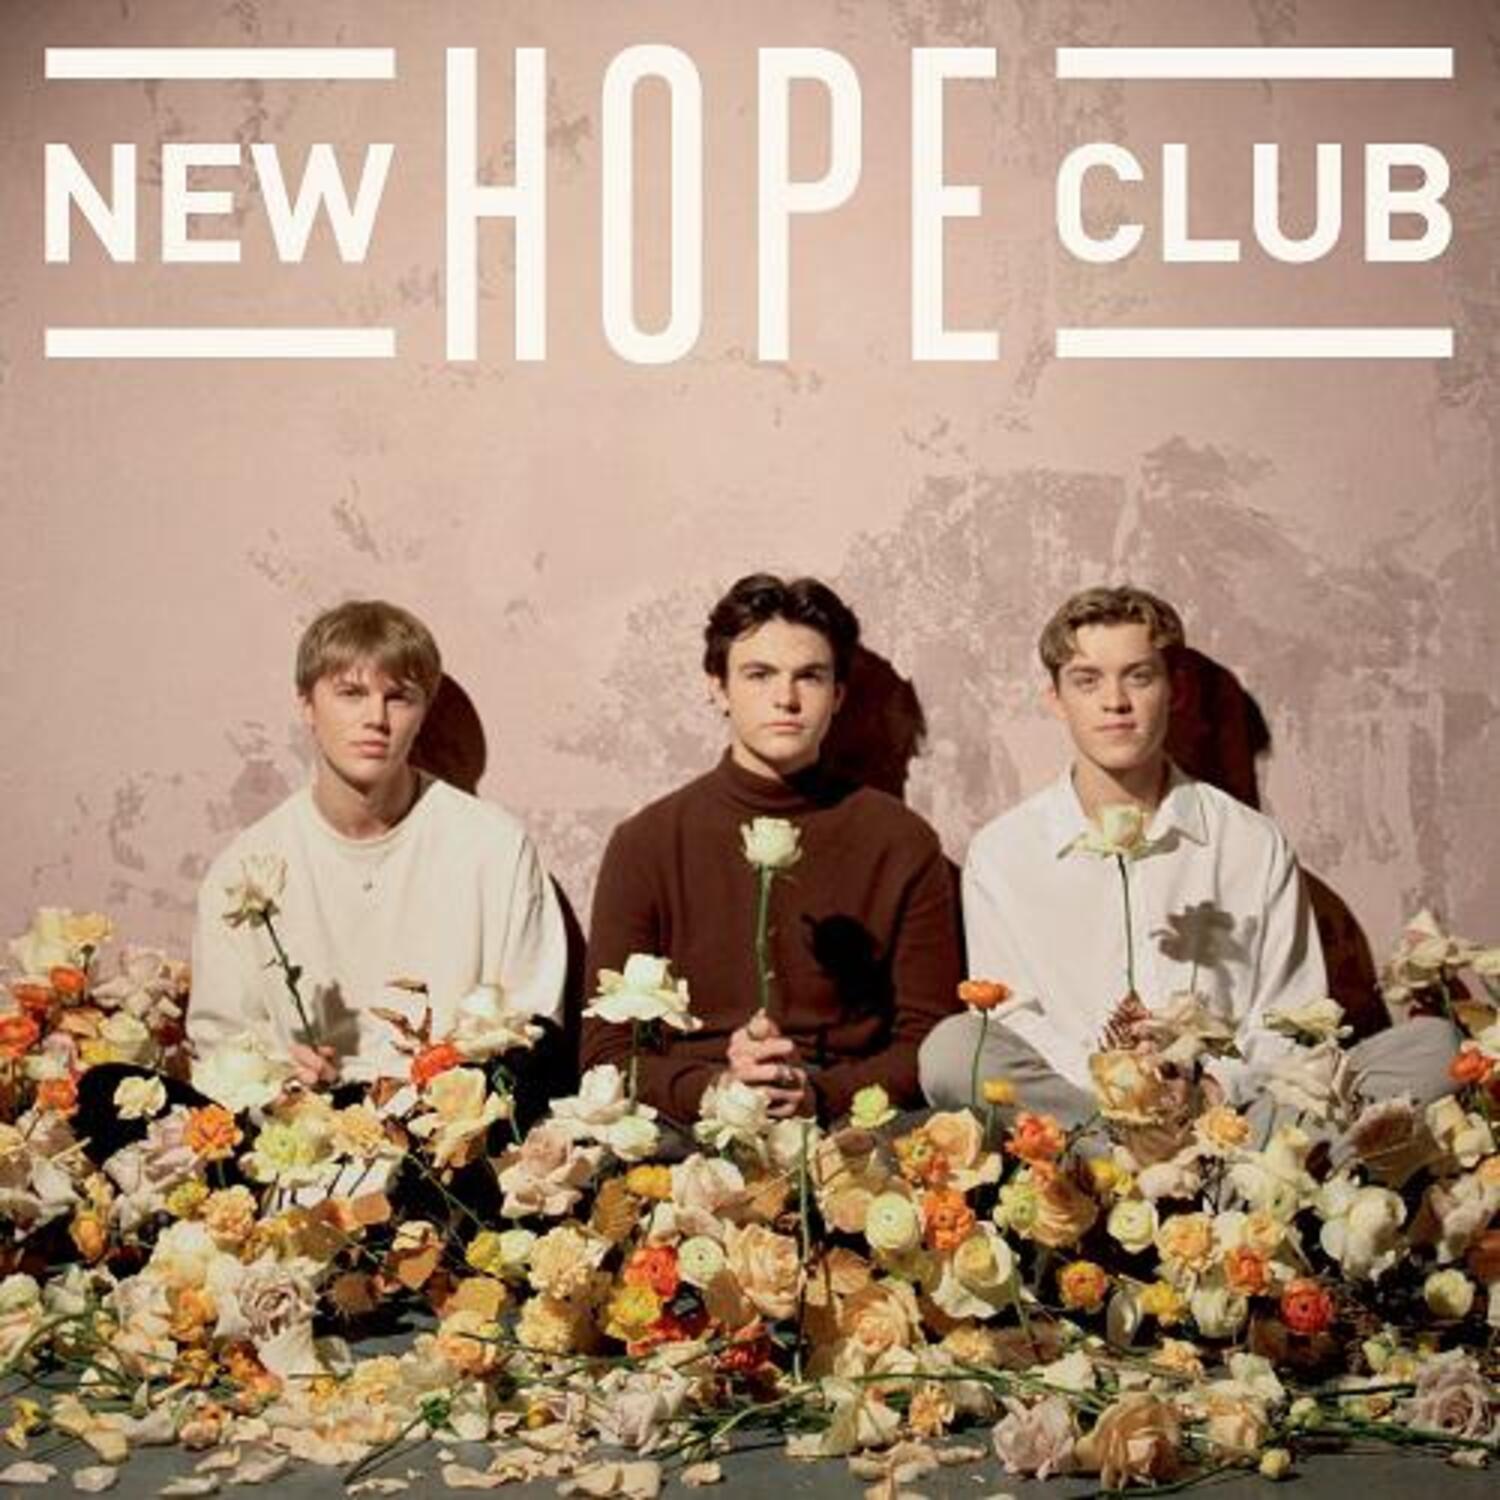 NEW HOPE CLUB(뉴 호프 클럽) - [NEW HOPE CLUB]